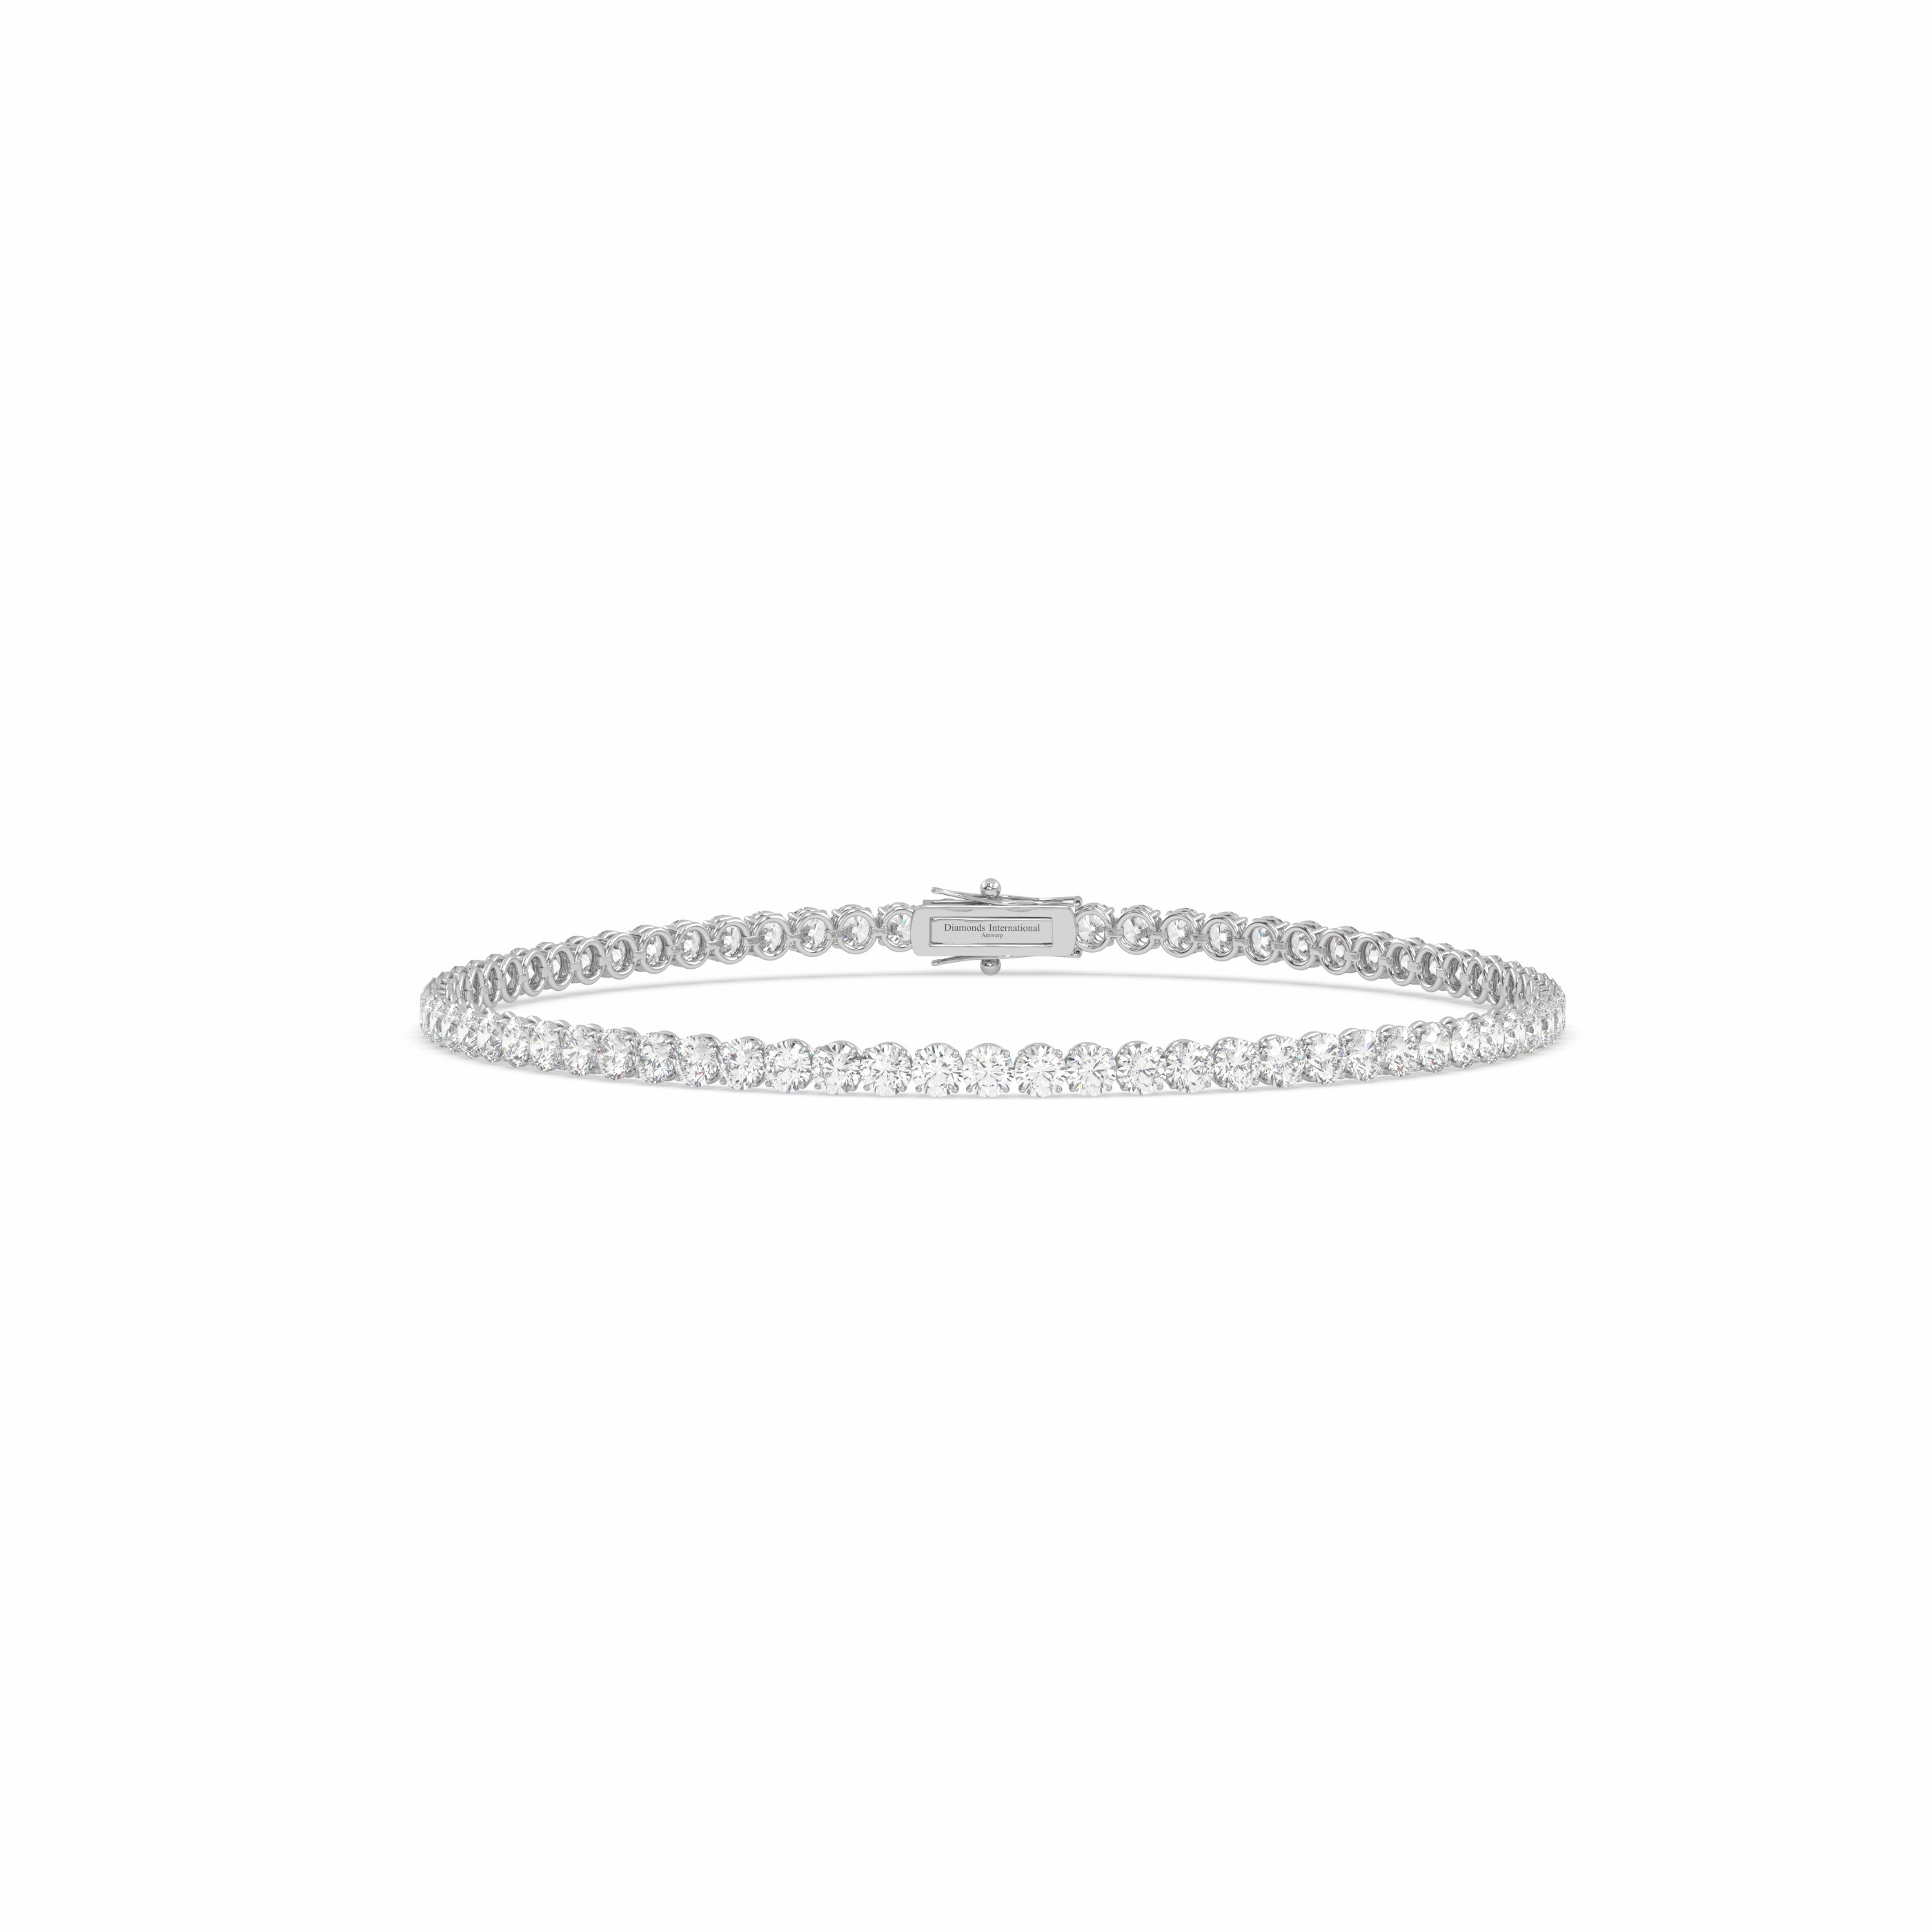 18k white gold 4.0 carat round cut diamond tennis bracelet